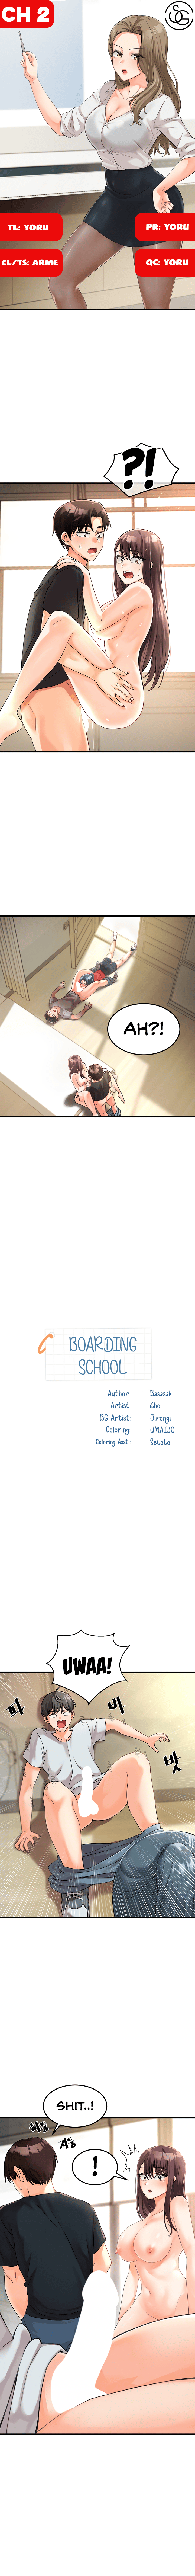 Boarding School NEW image